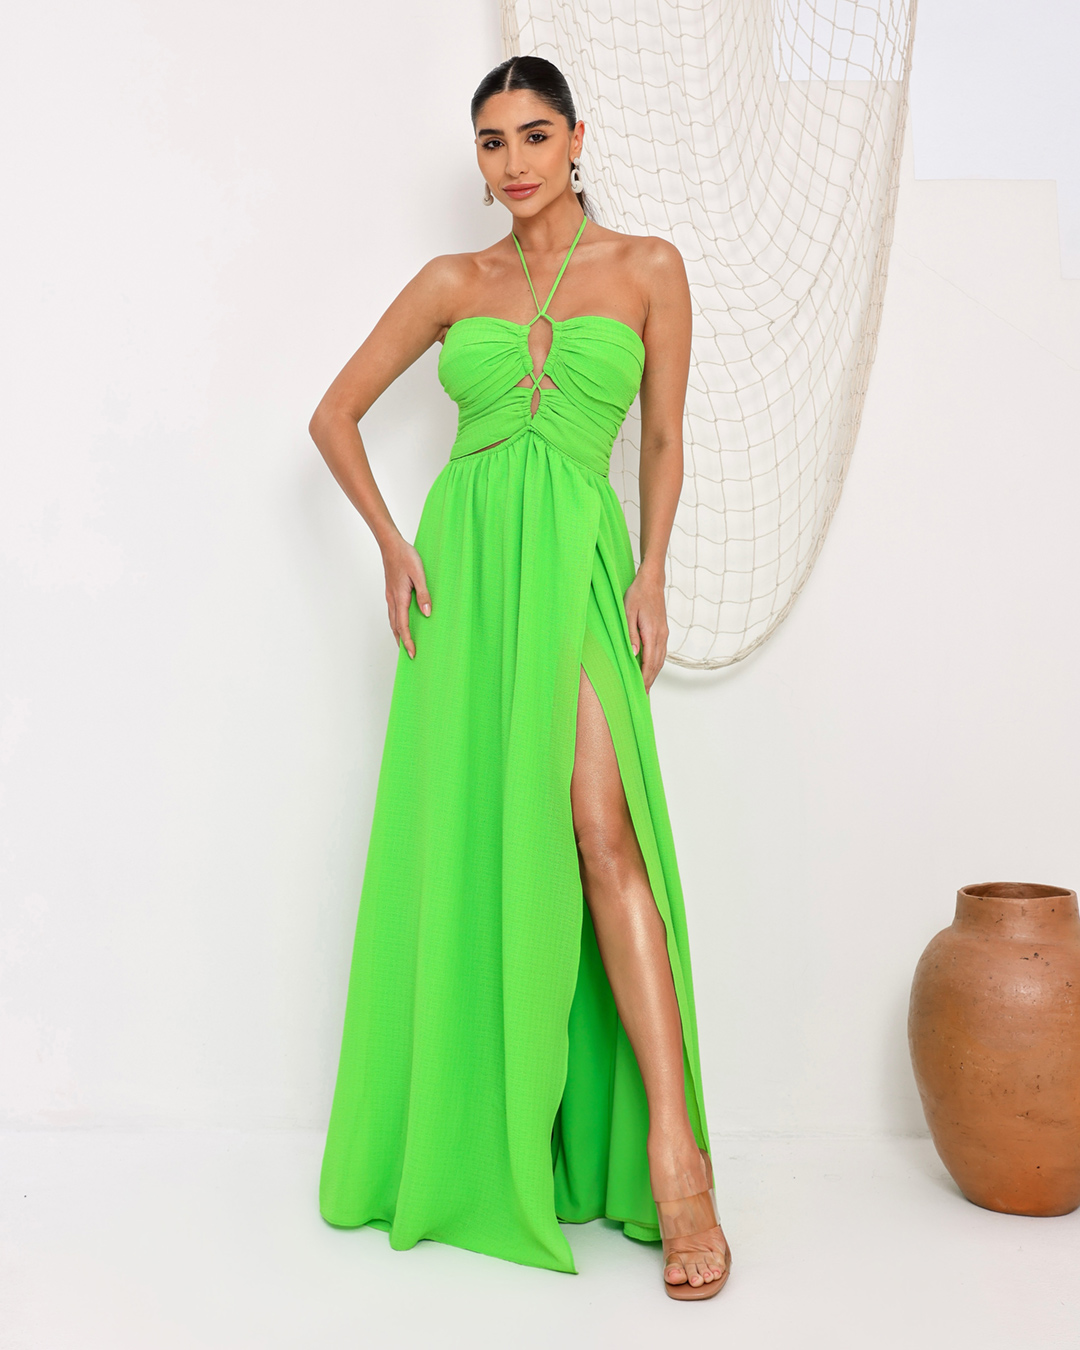 Dot Clothing - Dress Dot Clothing Straps Green - 2089VERDE